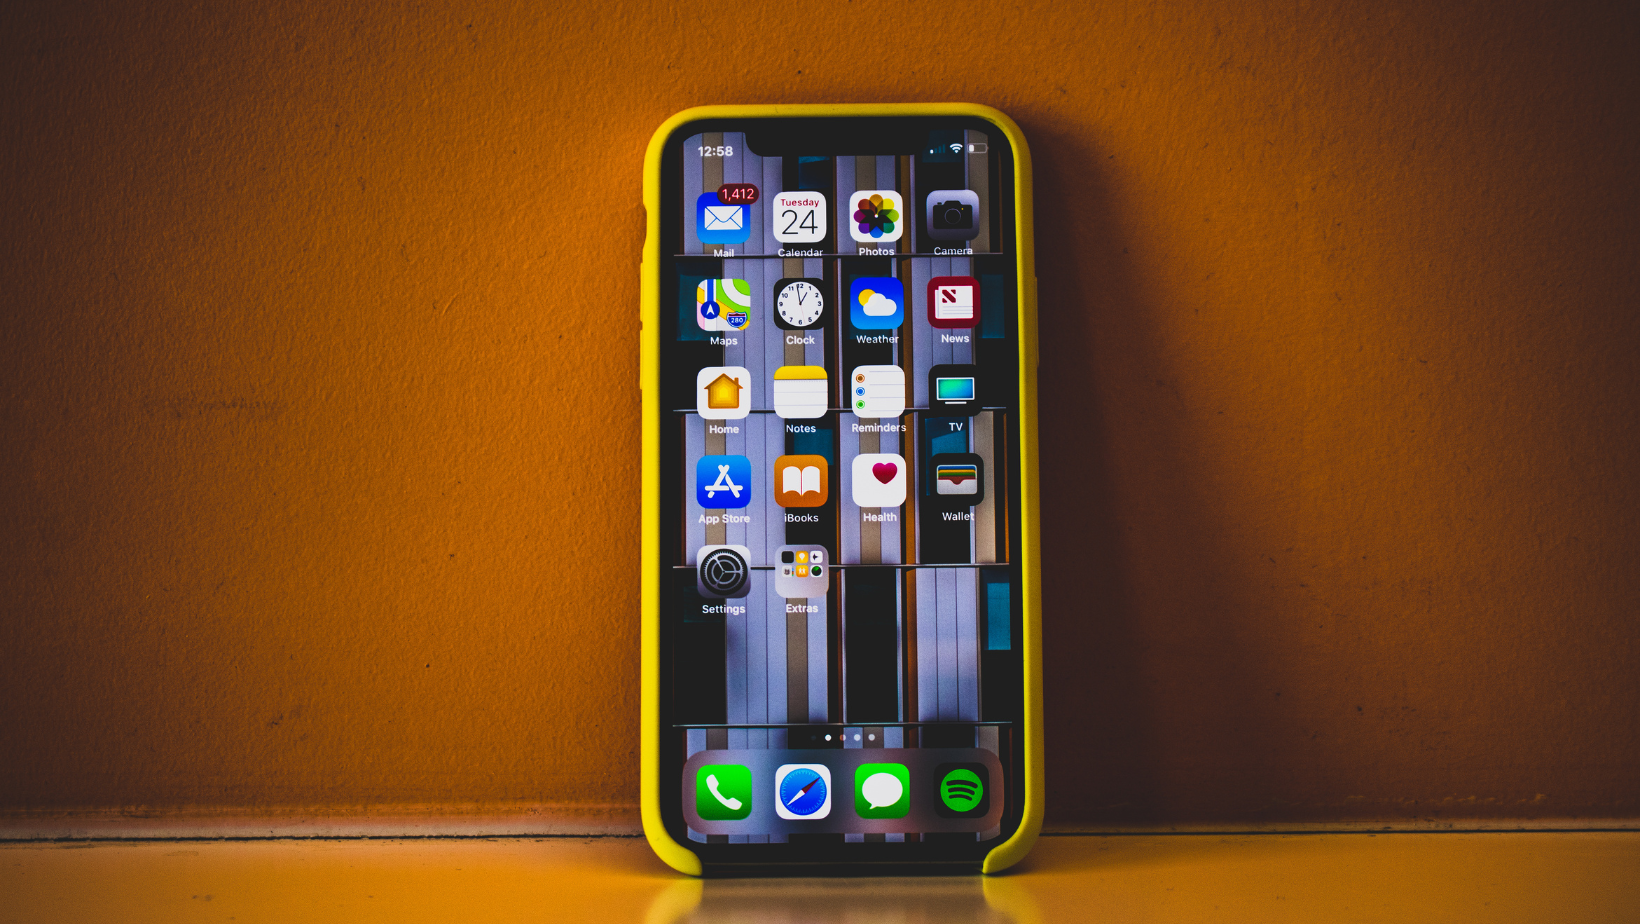 yellow iphone wallpaper